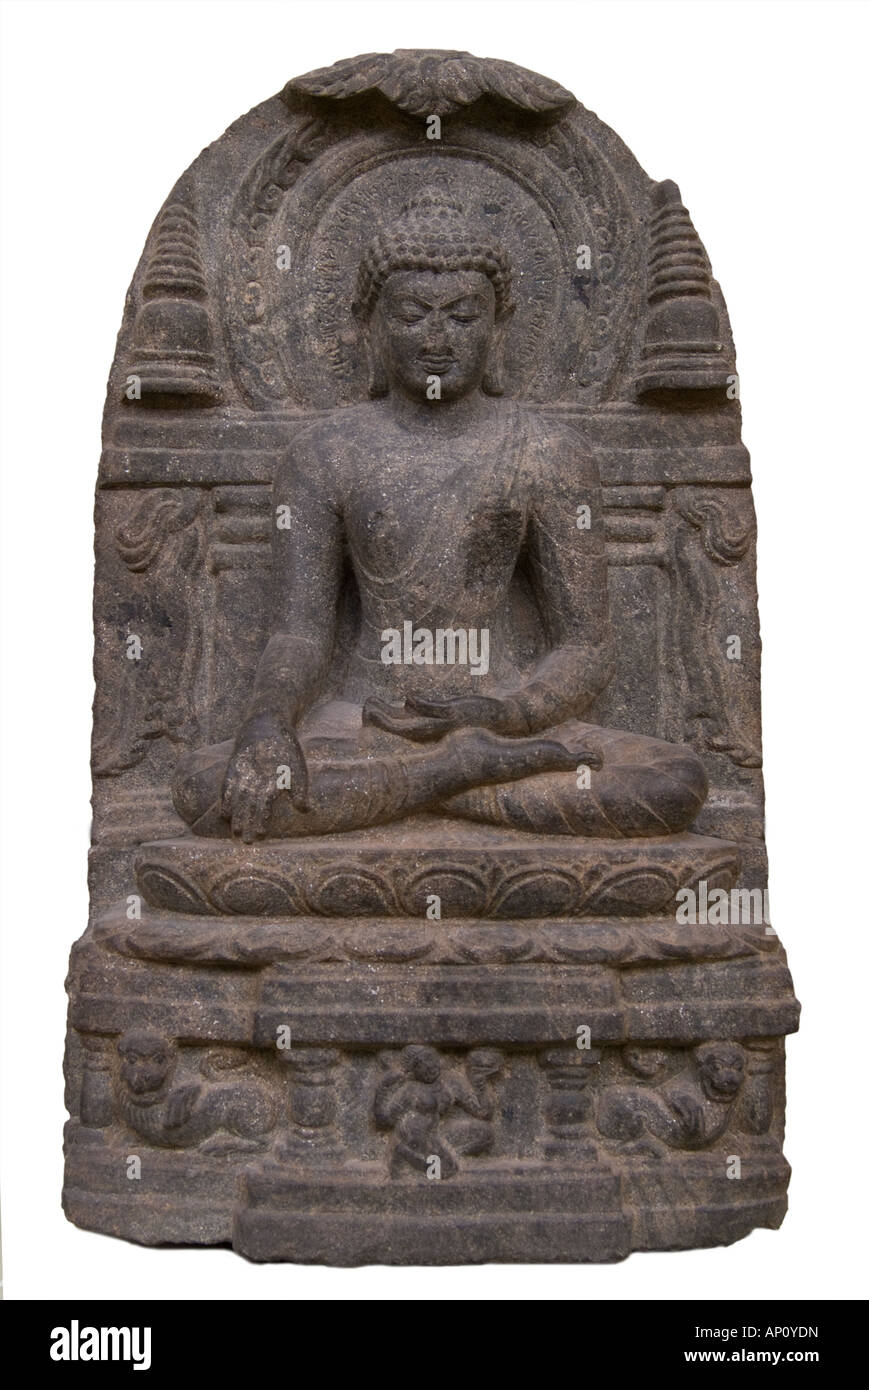 Bihar Buddha Bengal Region Nord Ost Indien Pala Periode 11 12 Jahrhundert auf Lotus sitzend Thron in Padmasana Yoga Posi gekreuzten Beinen Stockfoto